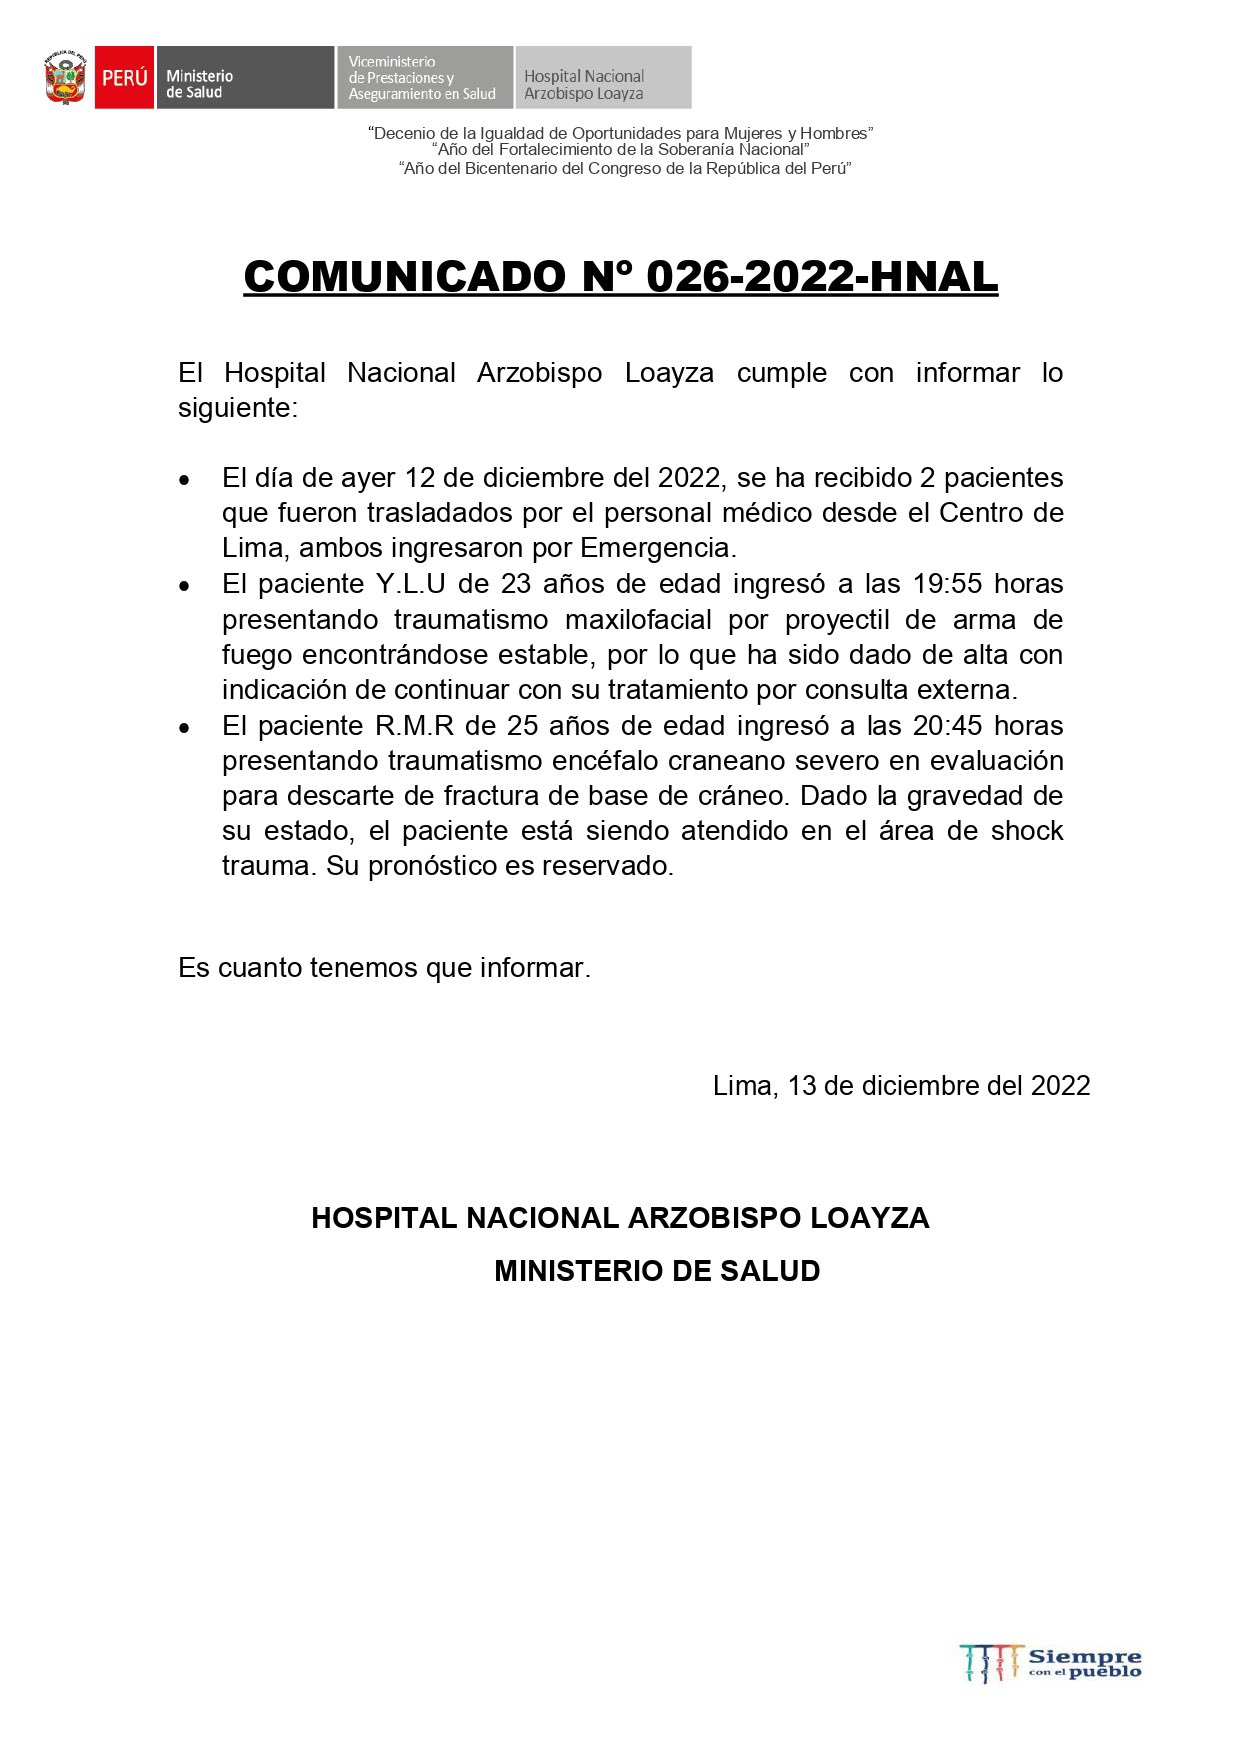 Comunicado Hospital Loayza